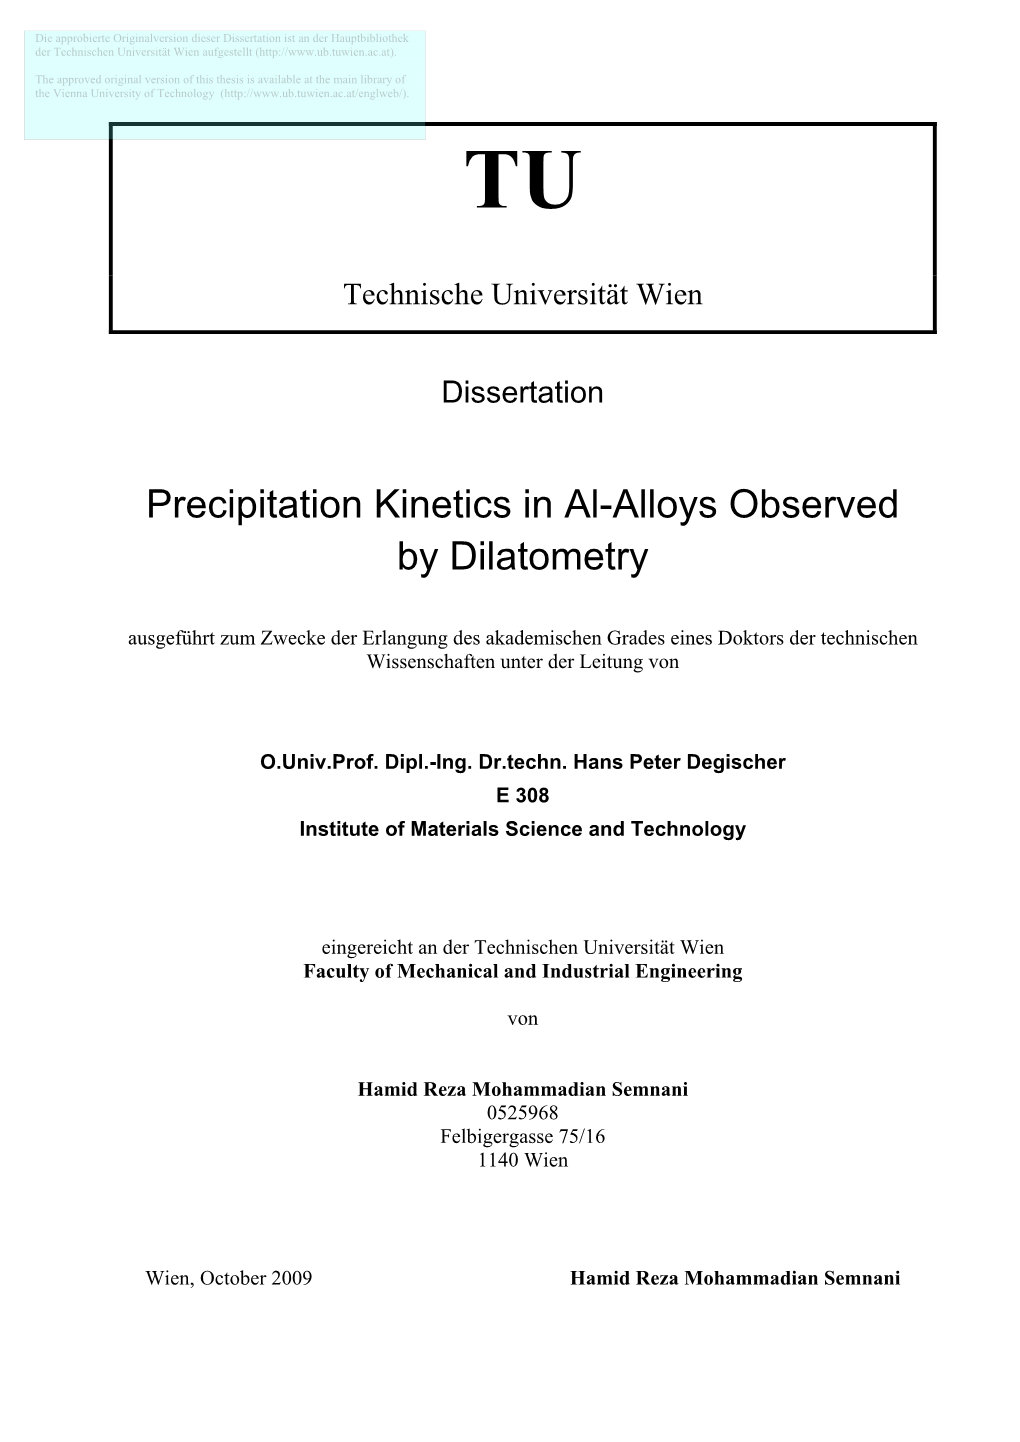 Precipitation Kinetics in Al-Alloys Observed by Dilatometry